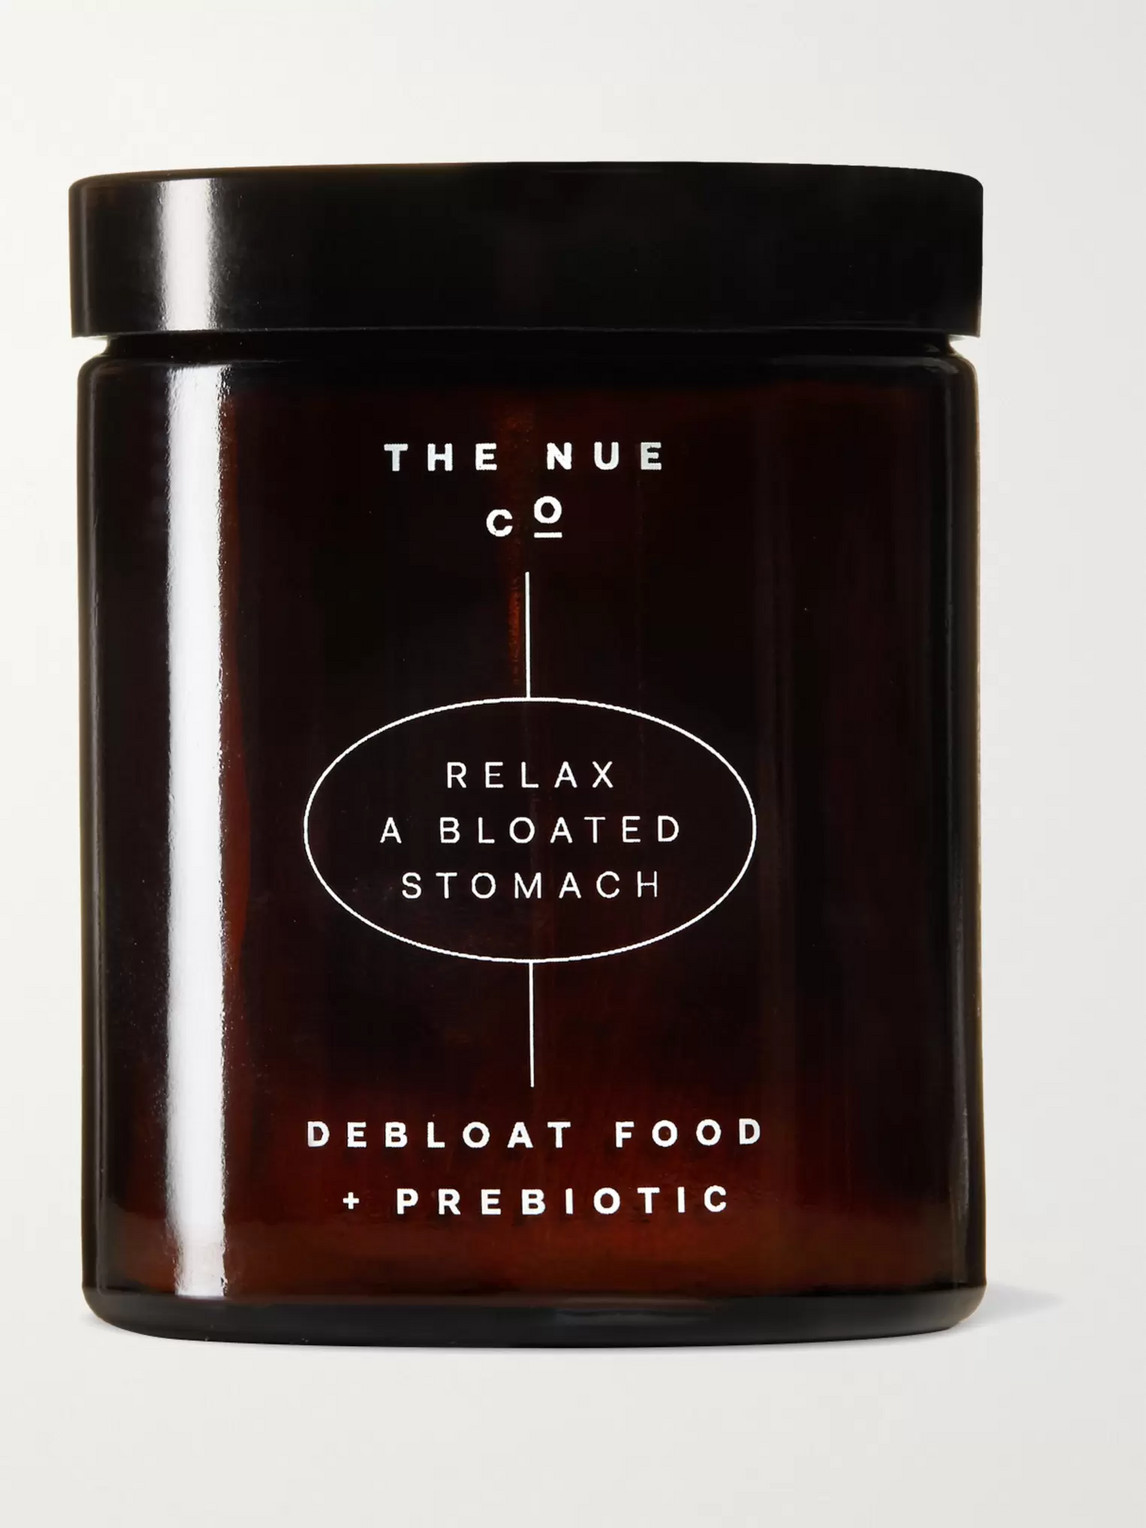 The Nue Co Debloat Food Prebiotic Supplement, 100g In Colorless